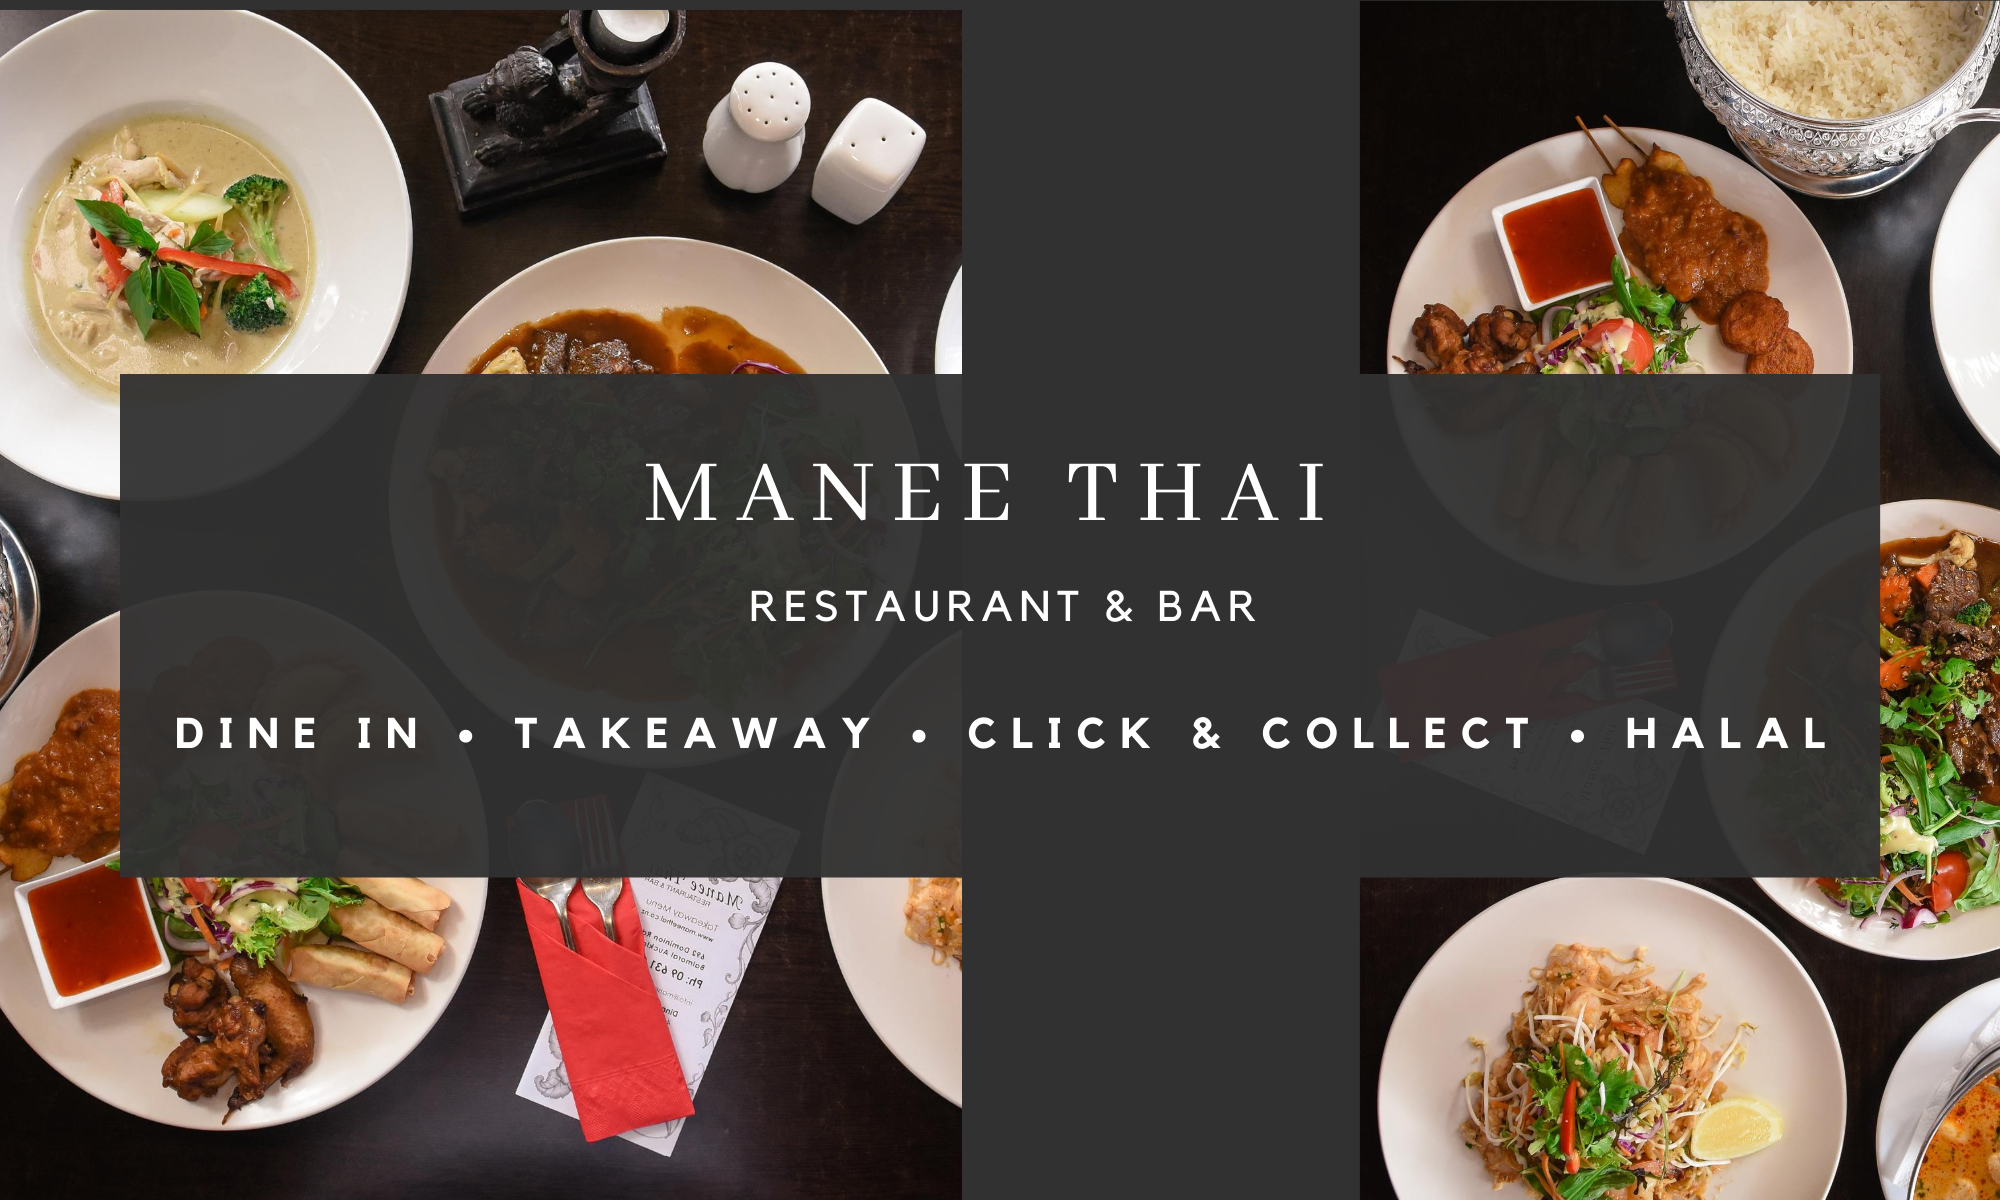 Manee Thai